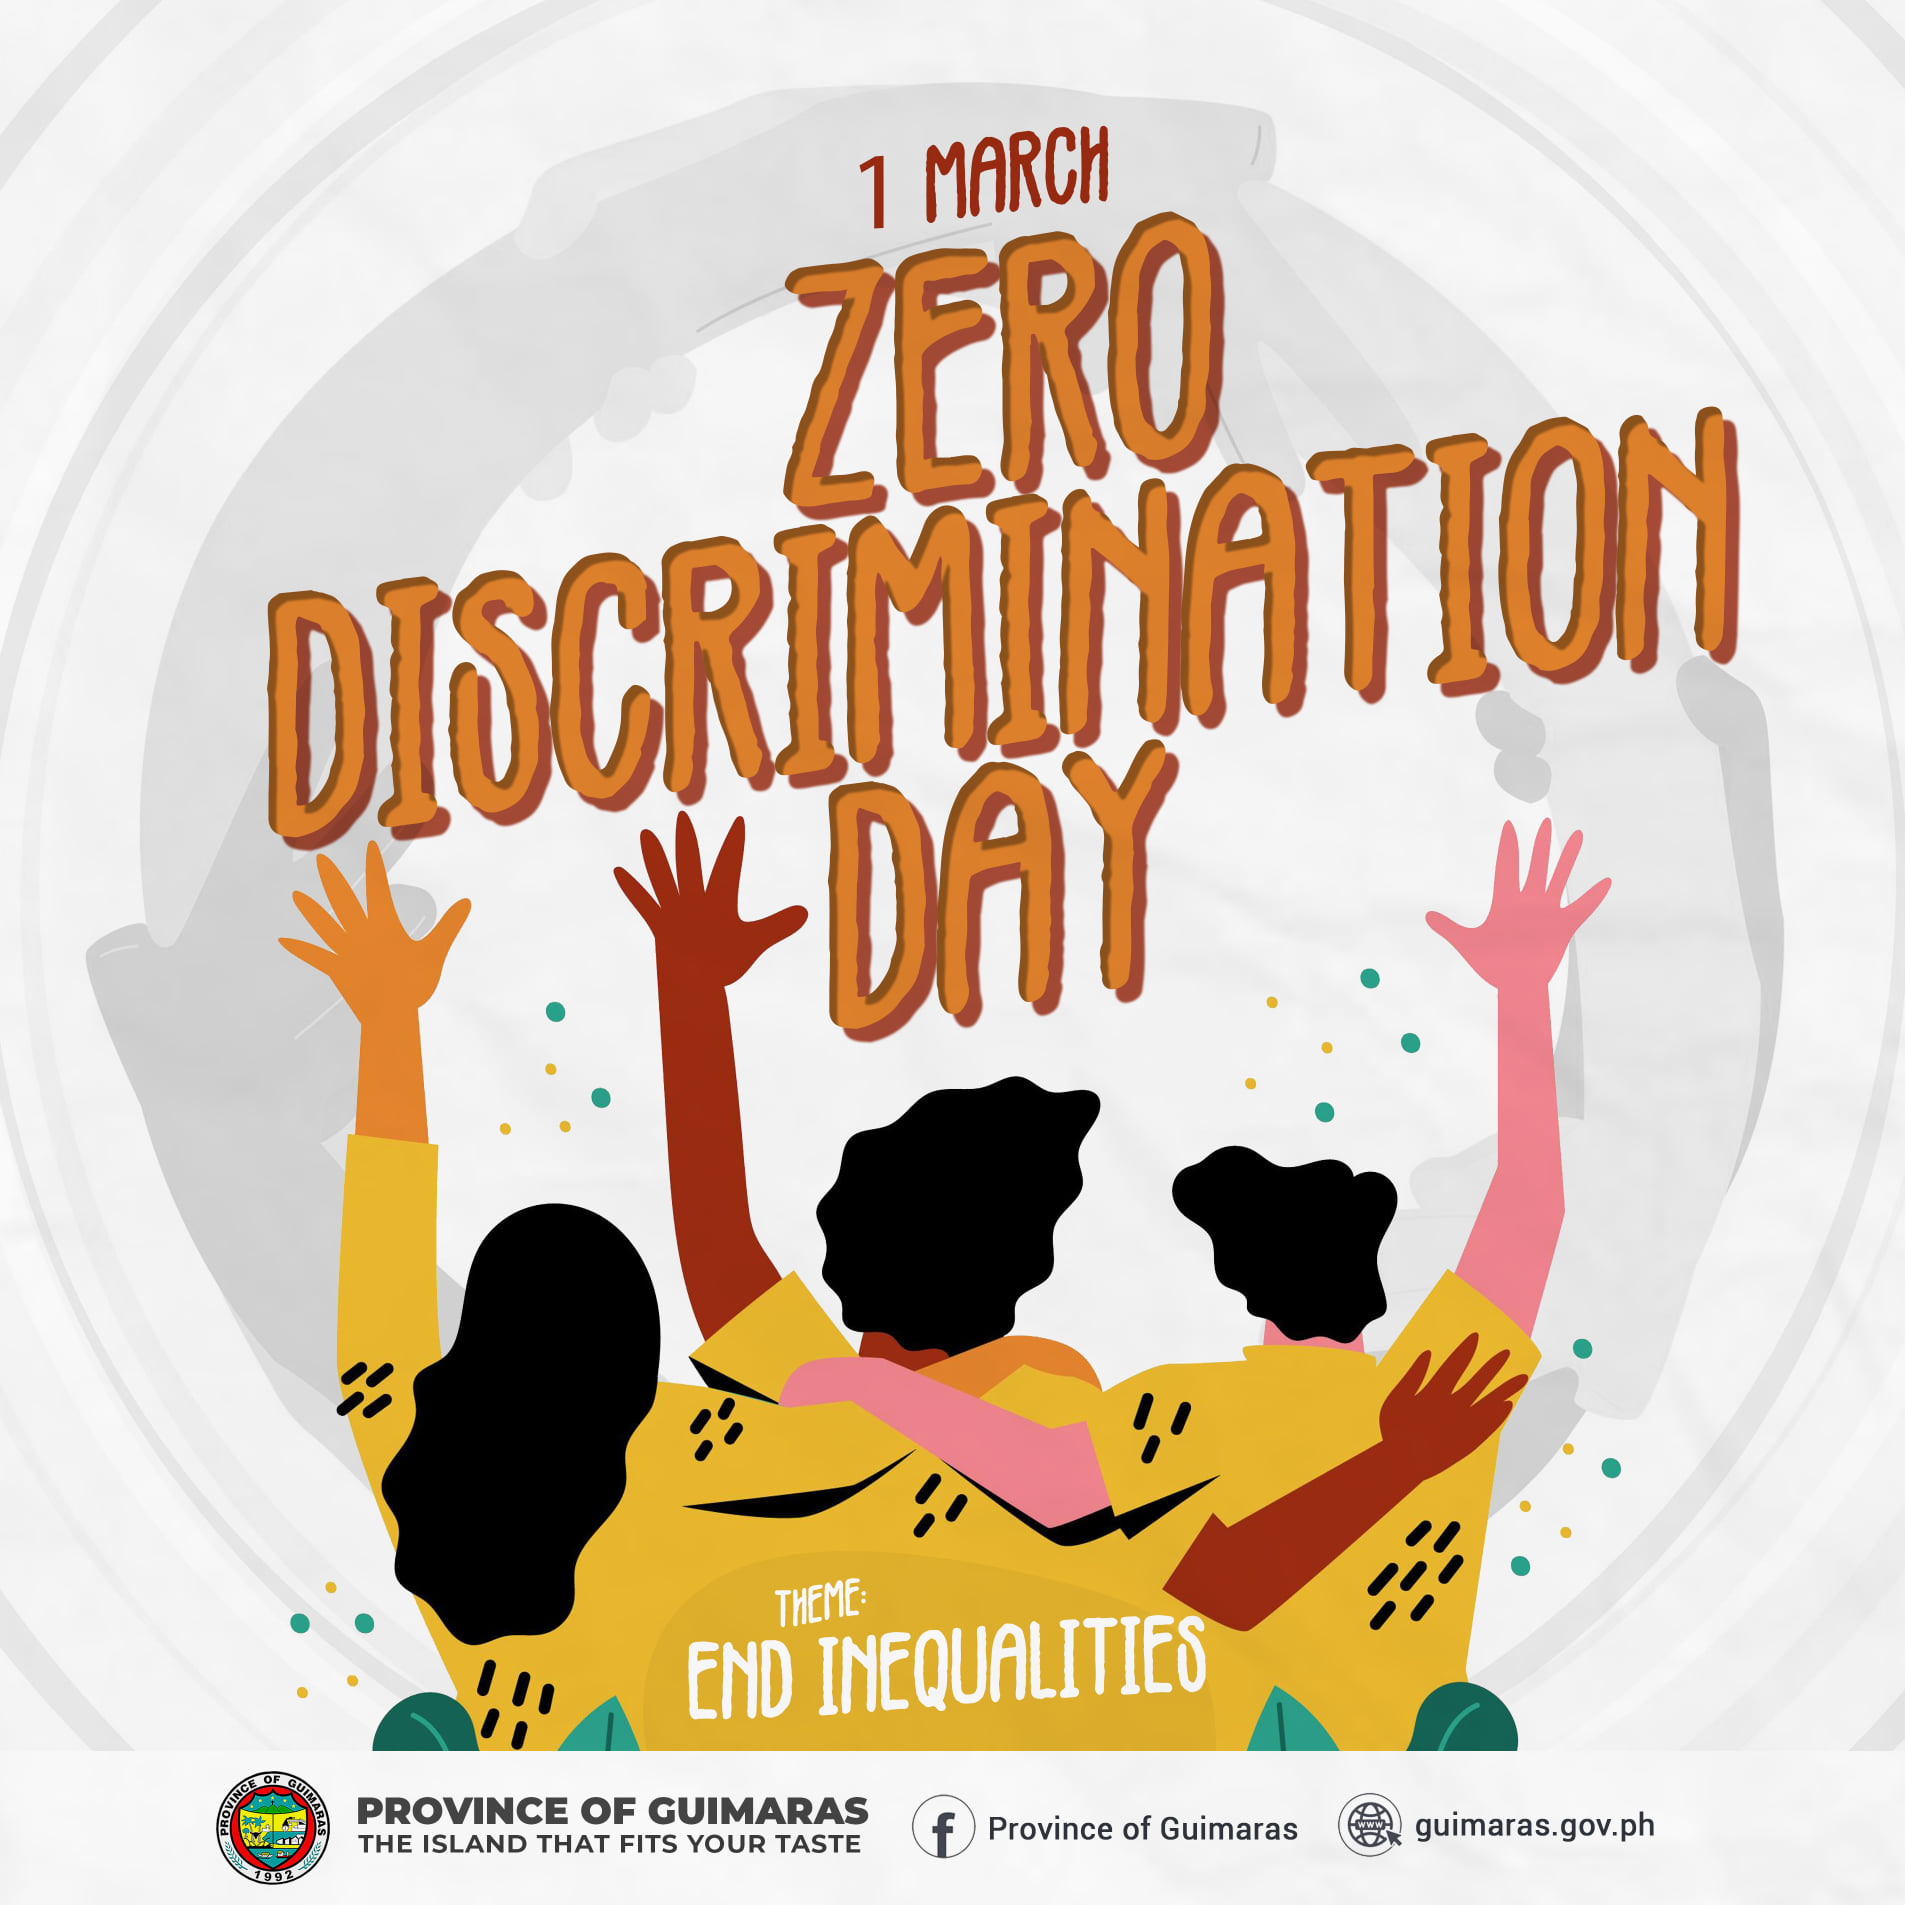 March 1 is Zero Discrimination Day